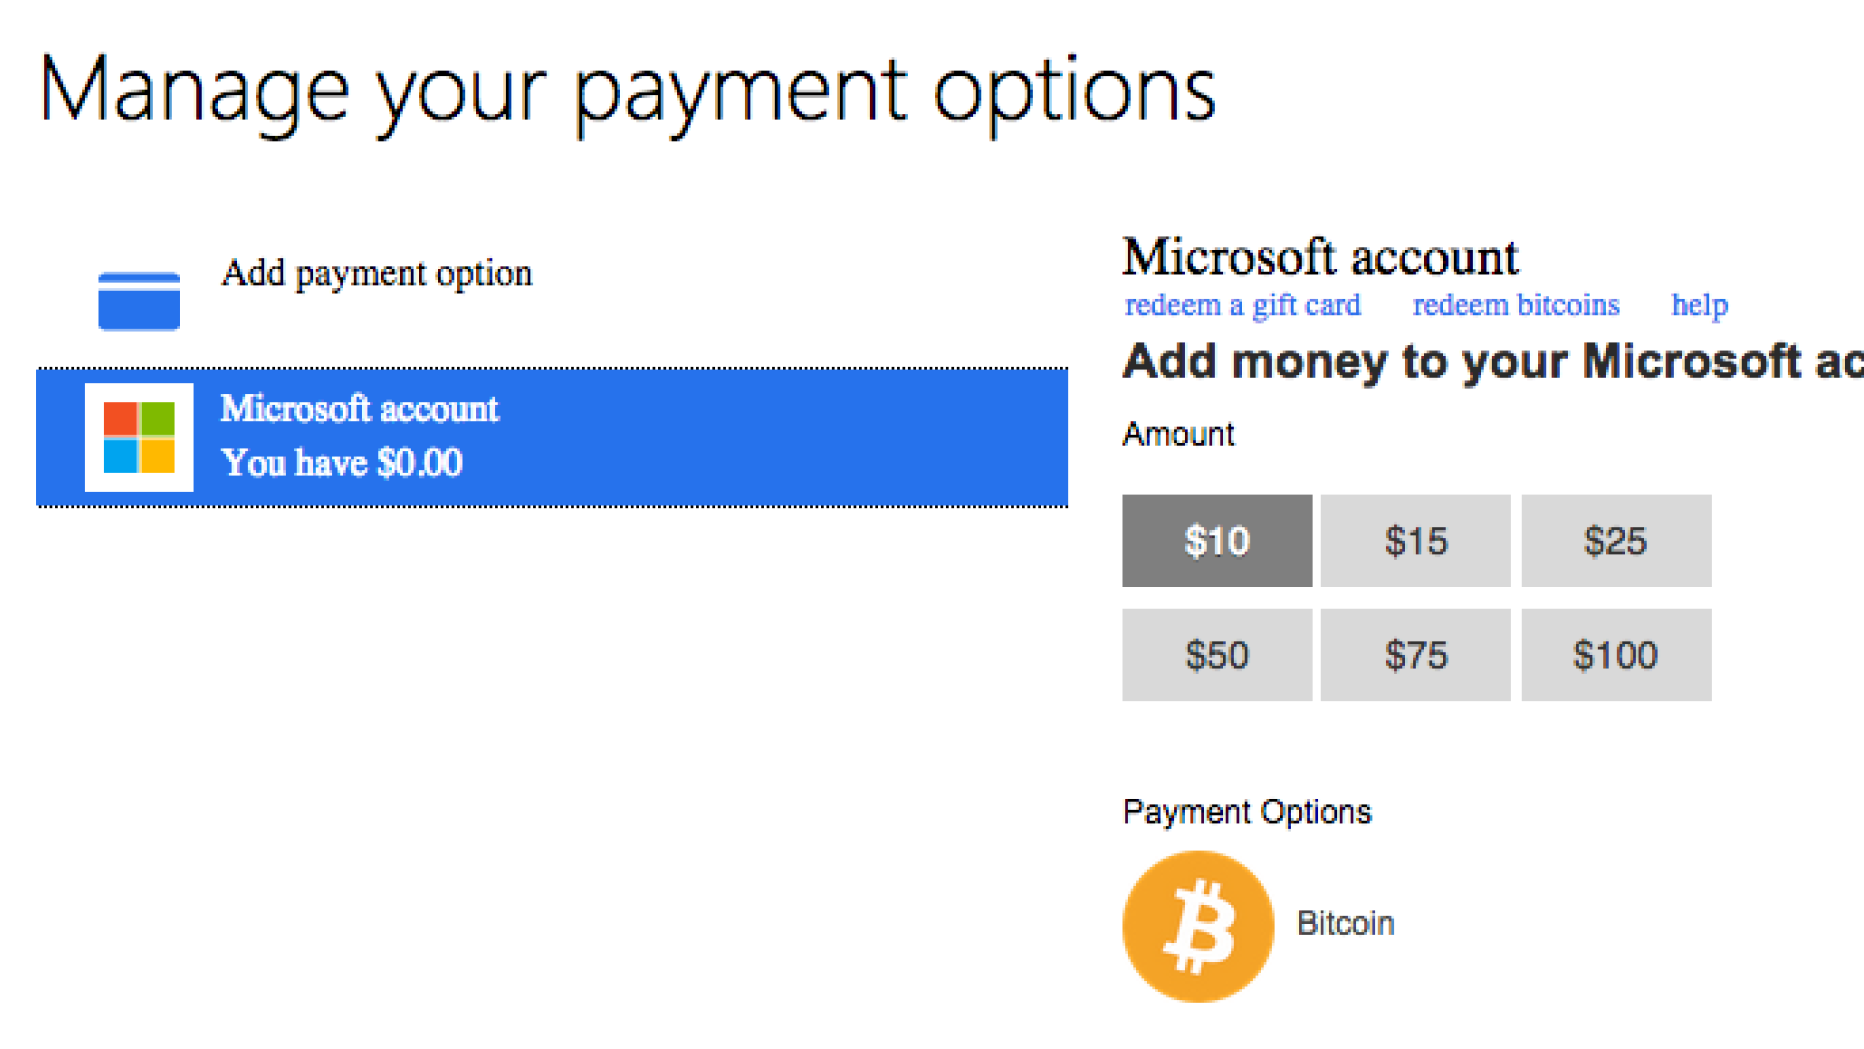 Pay add. Оплата Microsoft. Пополнить счет Майкрософт. Microsoft принимает оплату Bitcoin. Payment options Bitcoin Card.